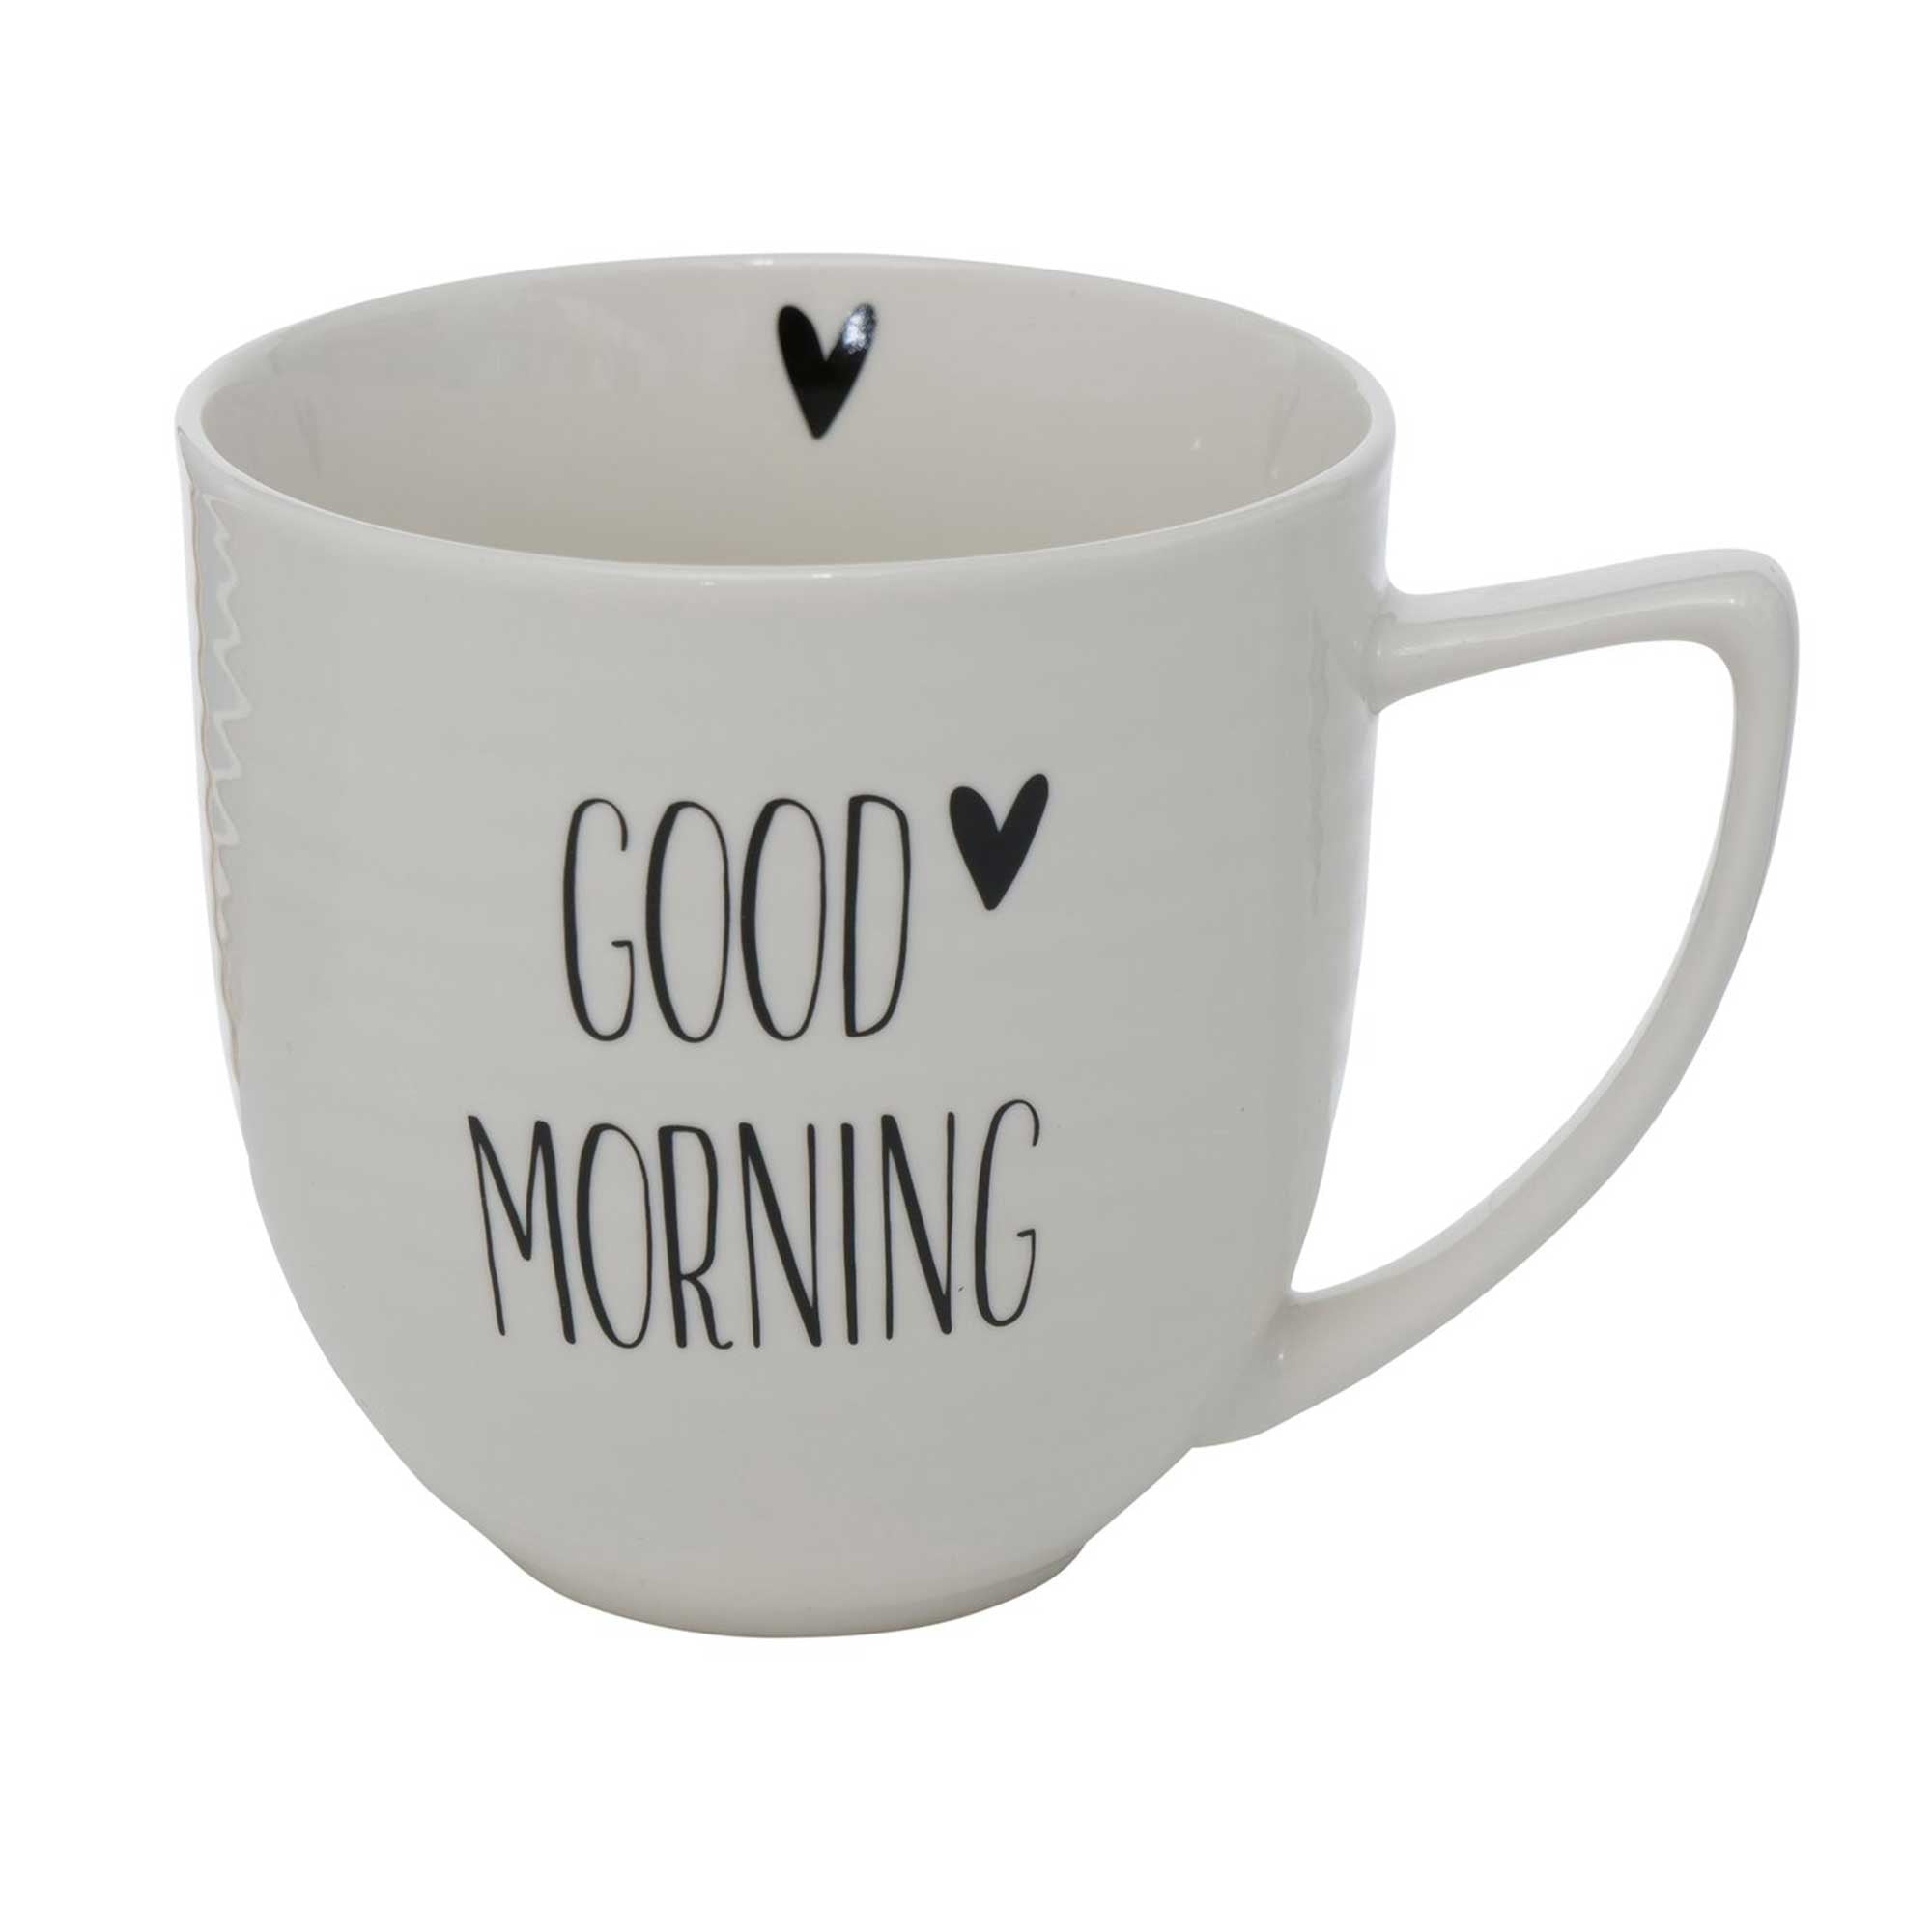 Morning mug set of 2